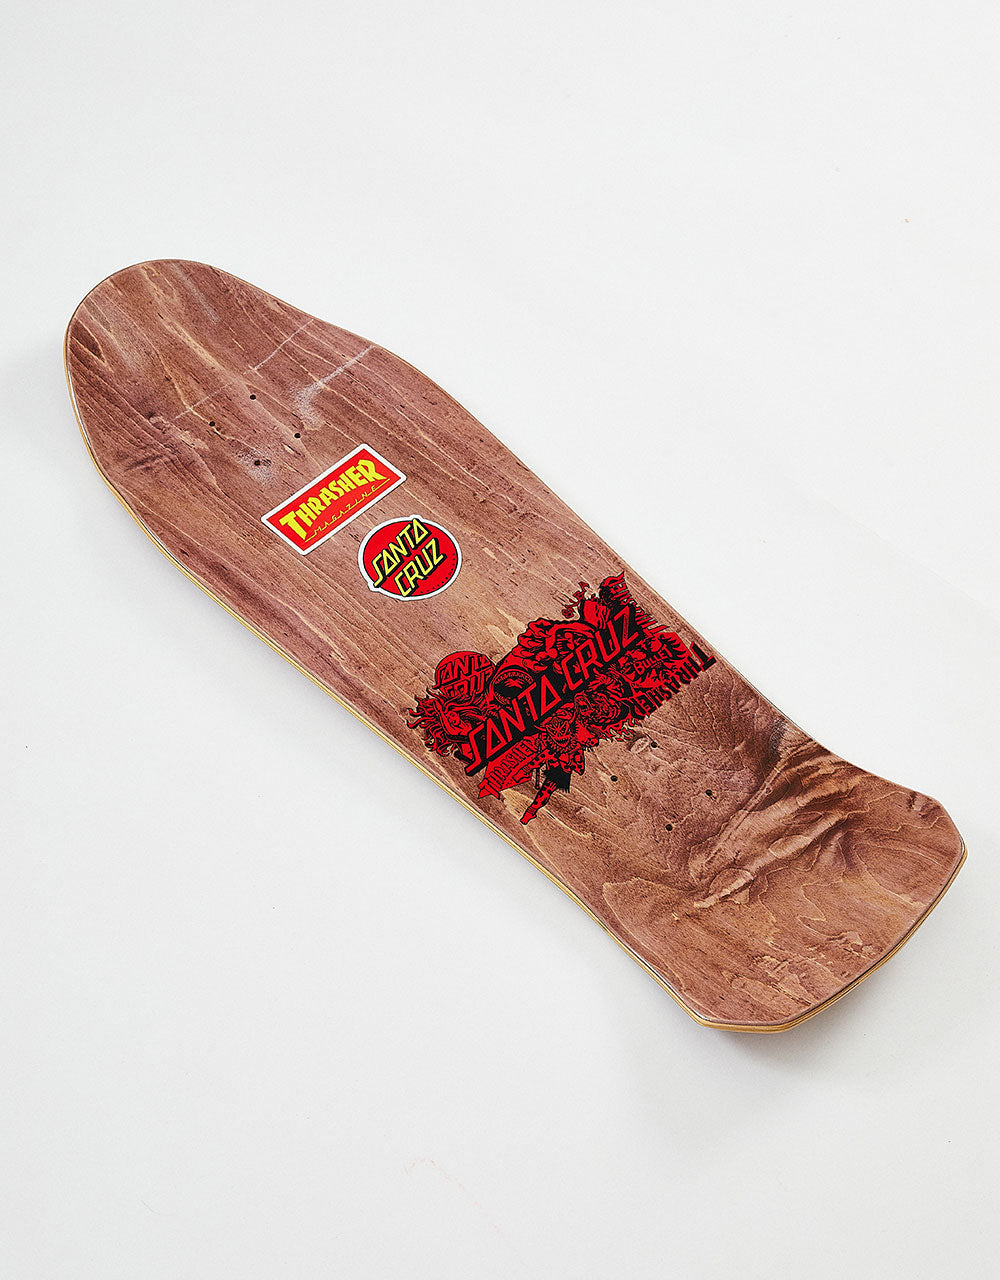 Santa Cruz x Thrasher Salba Oops Skateboard Deck - 10.4"